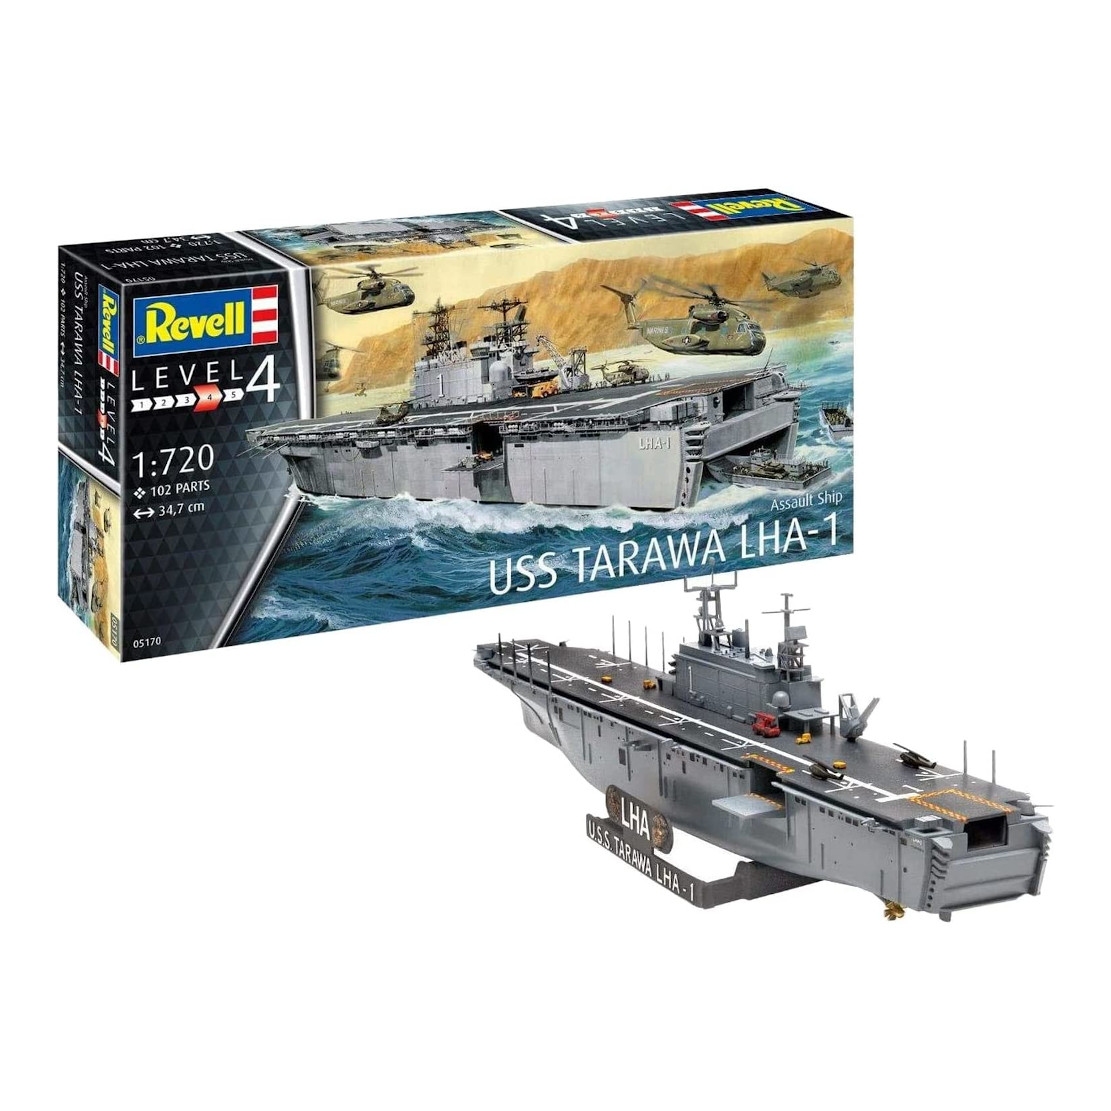 Revell Assault Ship U.S.S. Tarawa Lha-1 Model Kit